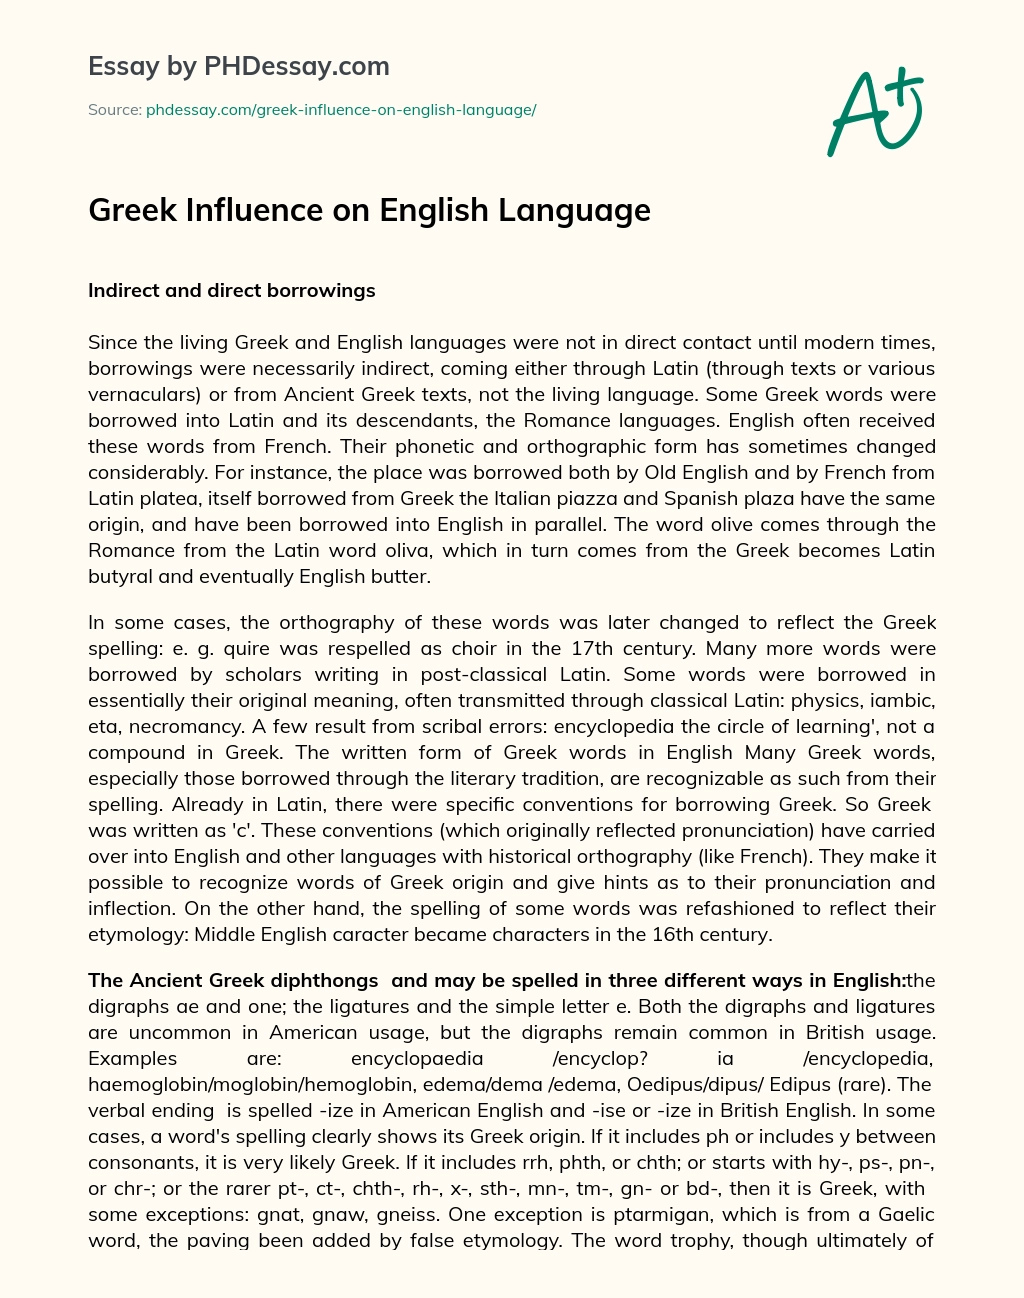 Greek Influence on English Language essay